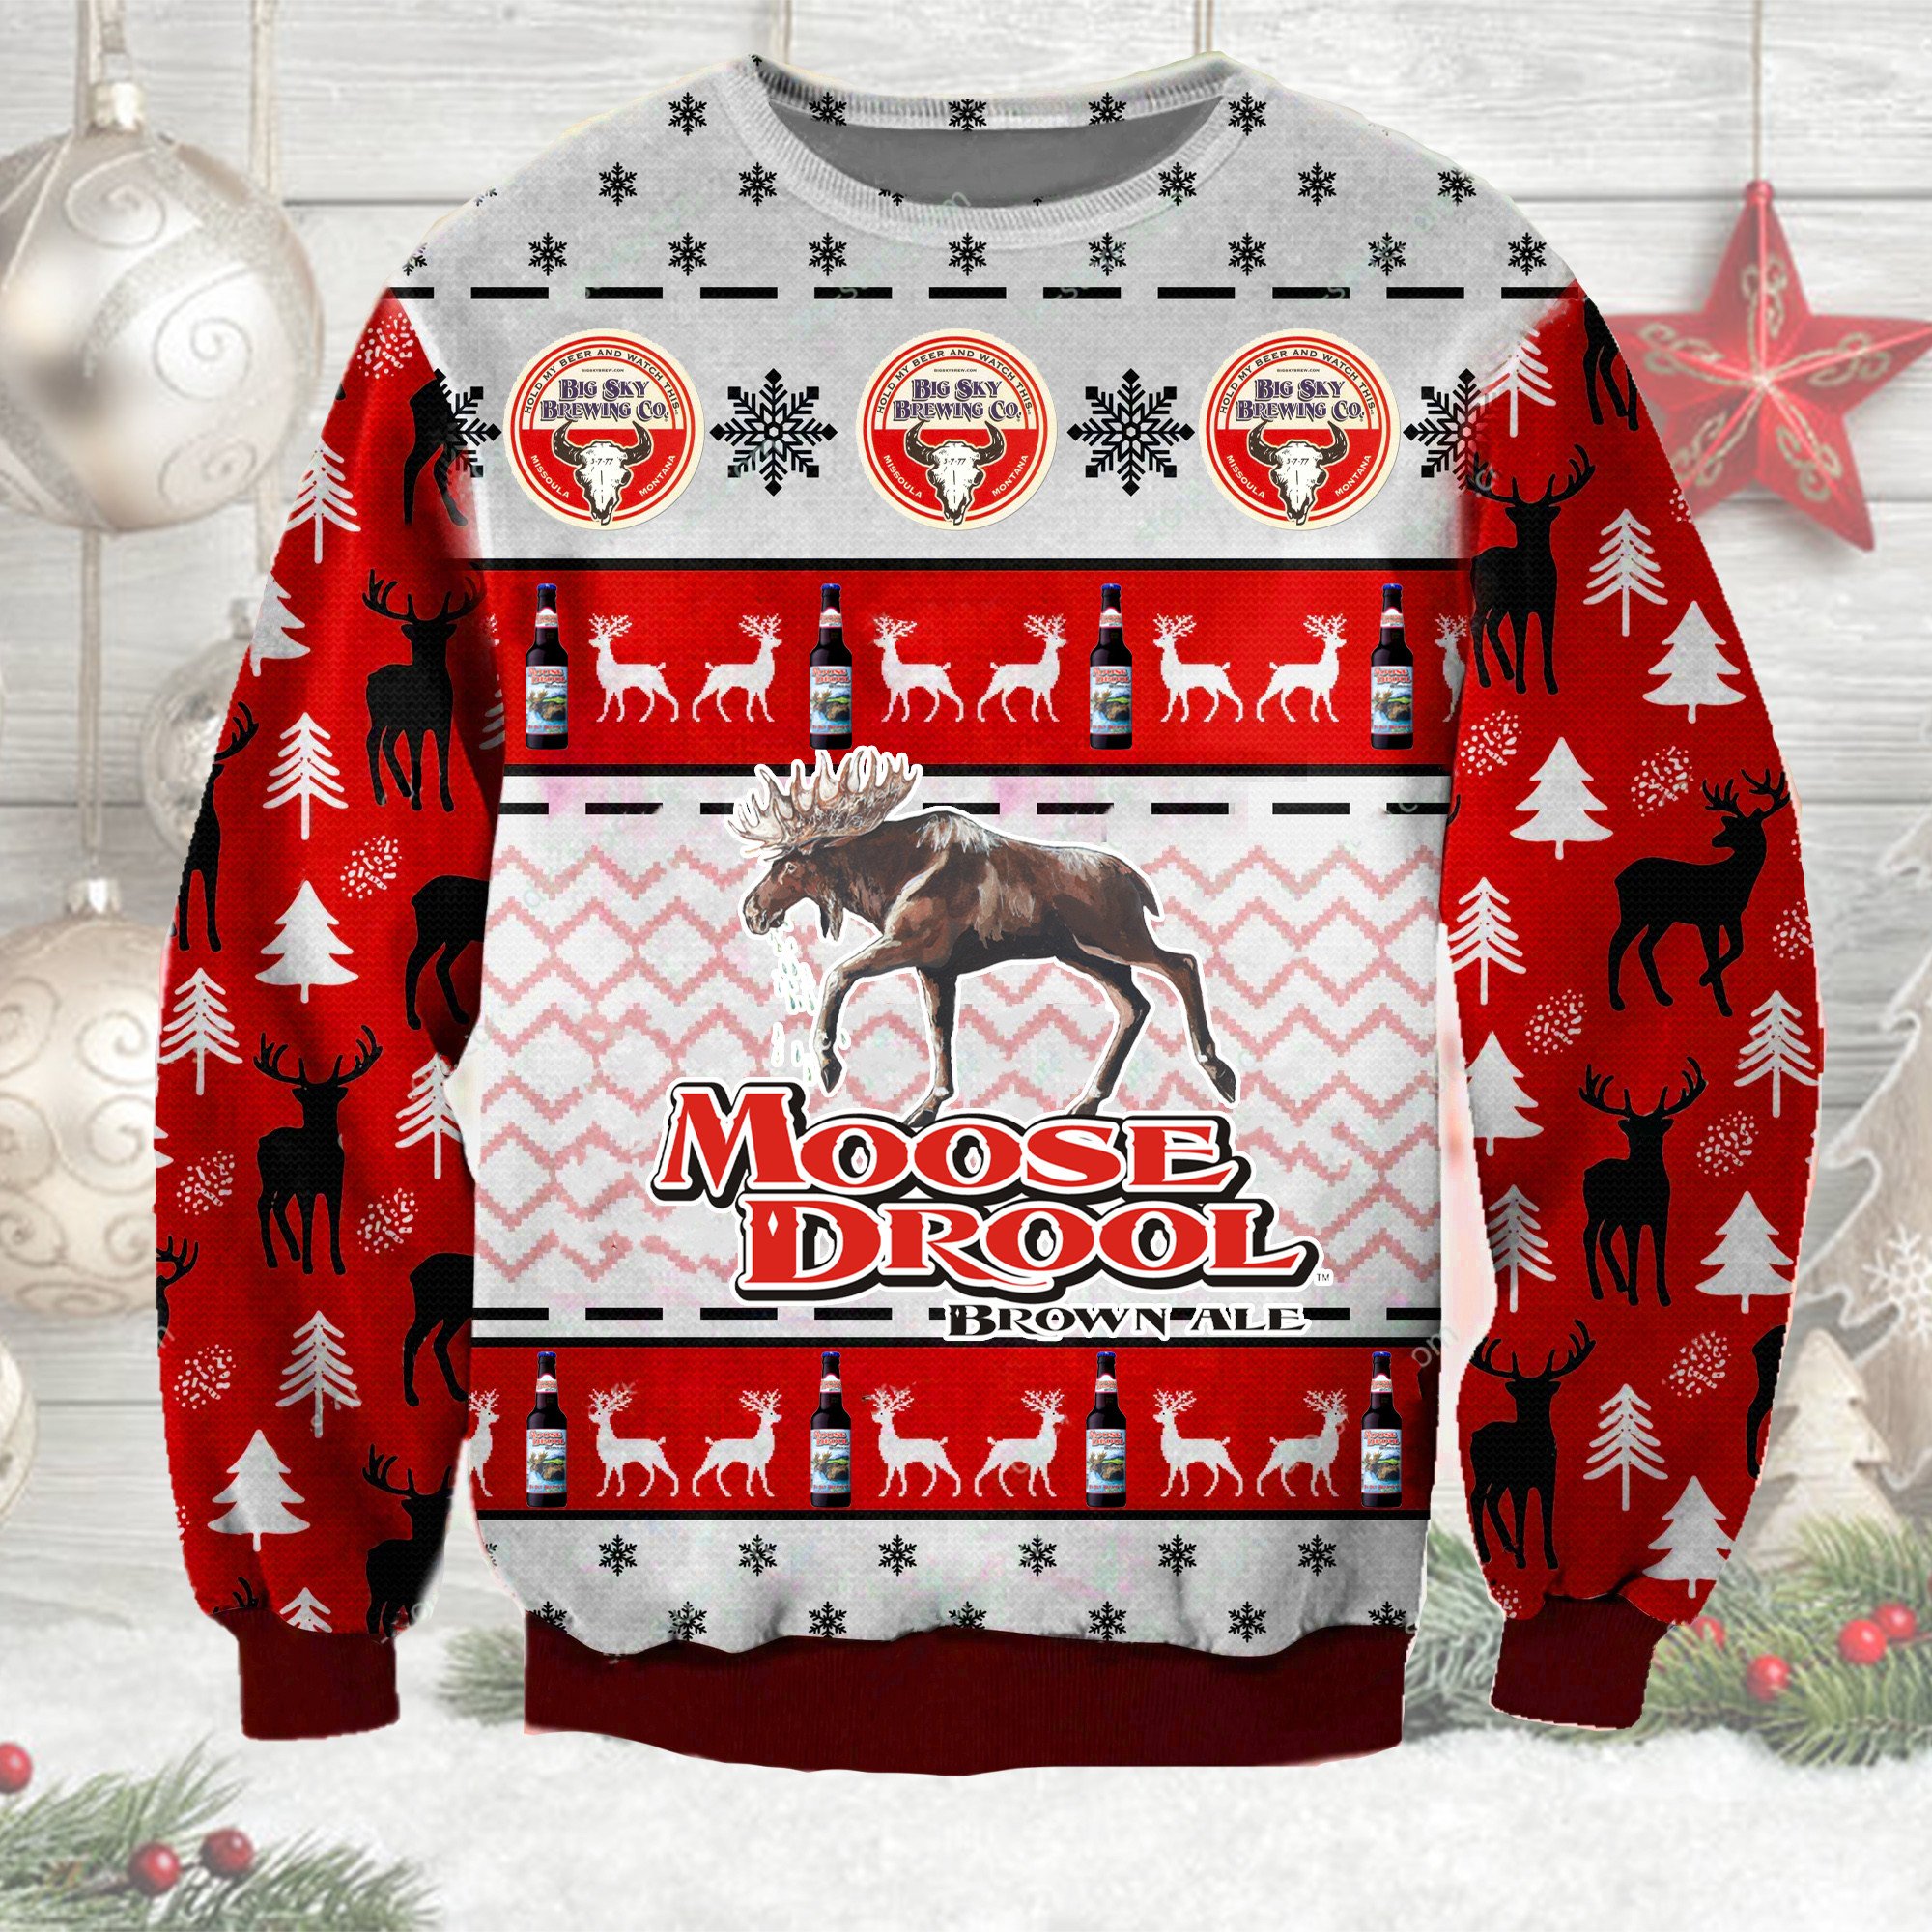 Moose Drool Brown Ale Christmas Sweater 1